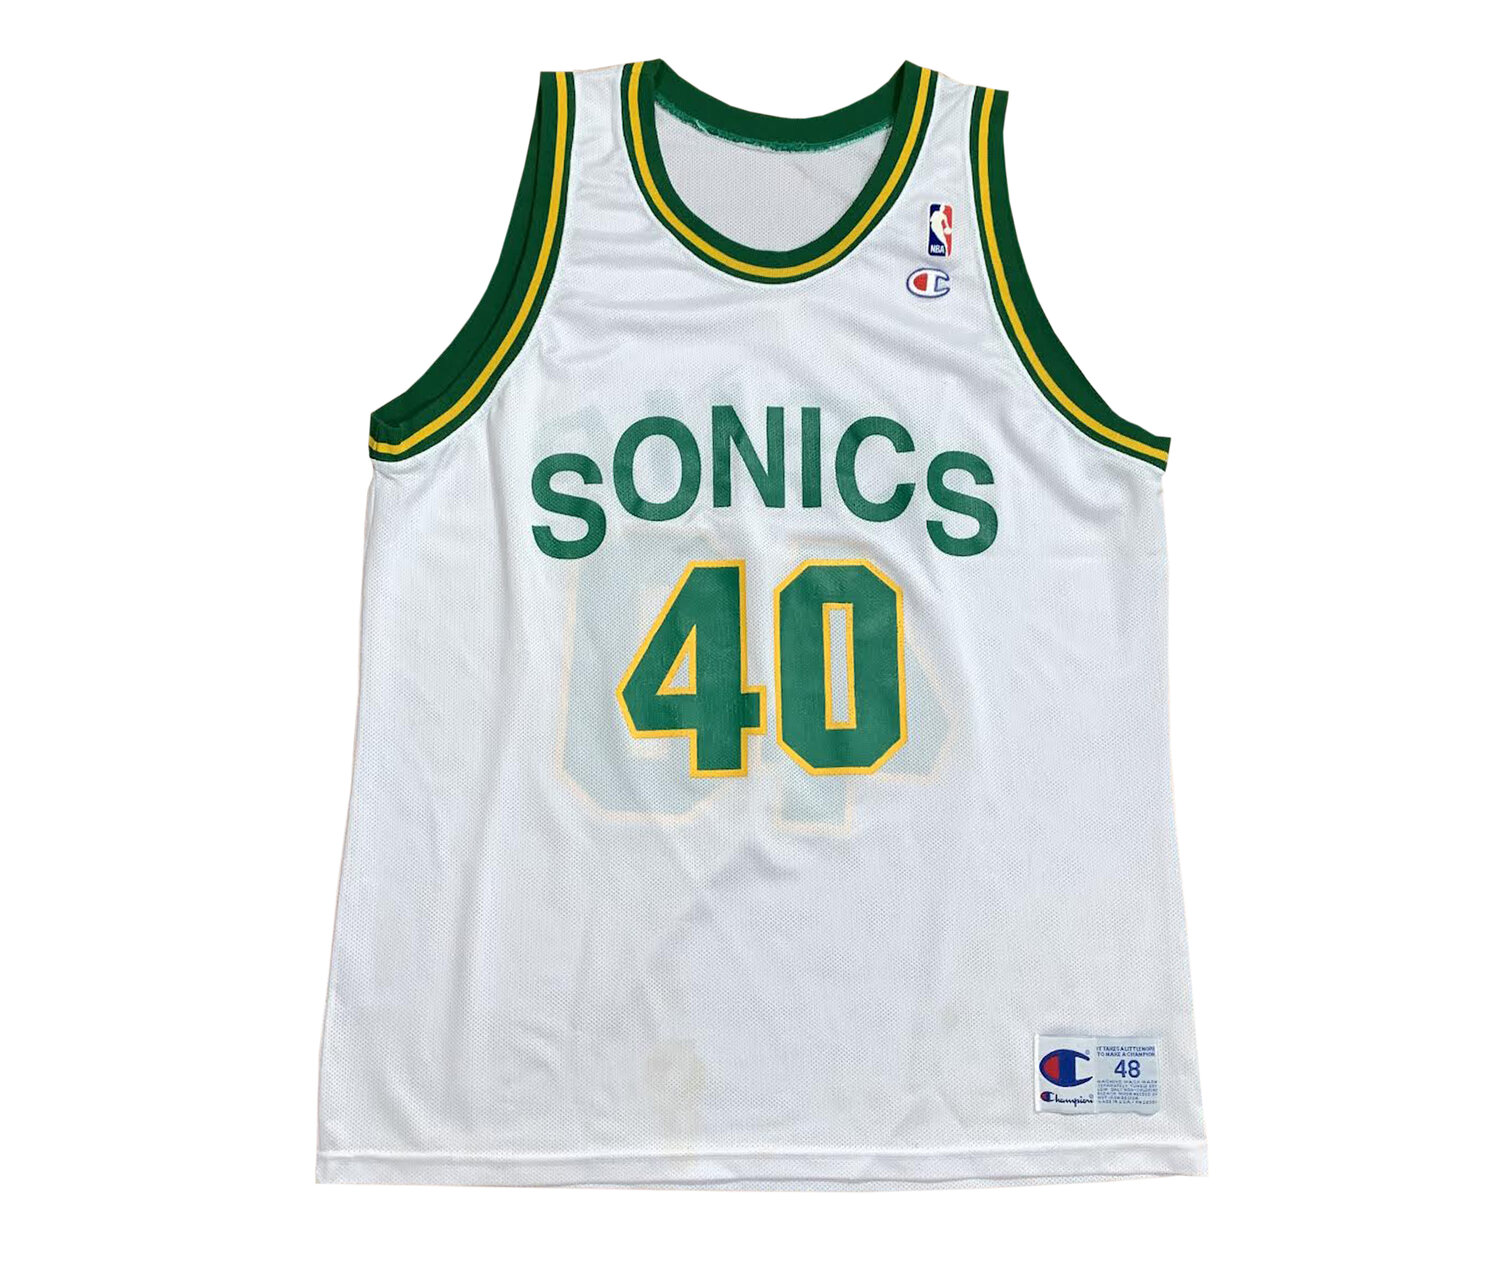 Vintage Shawn Kemp Seattle Sonics Champion Jersey 90s NBA